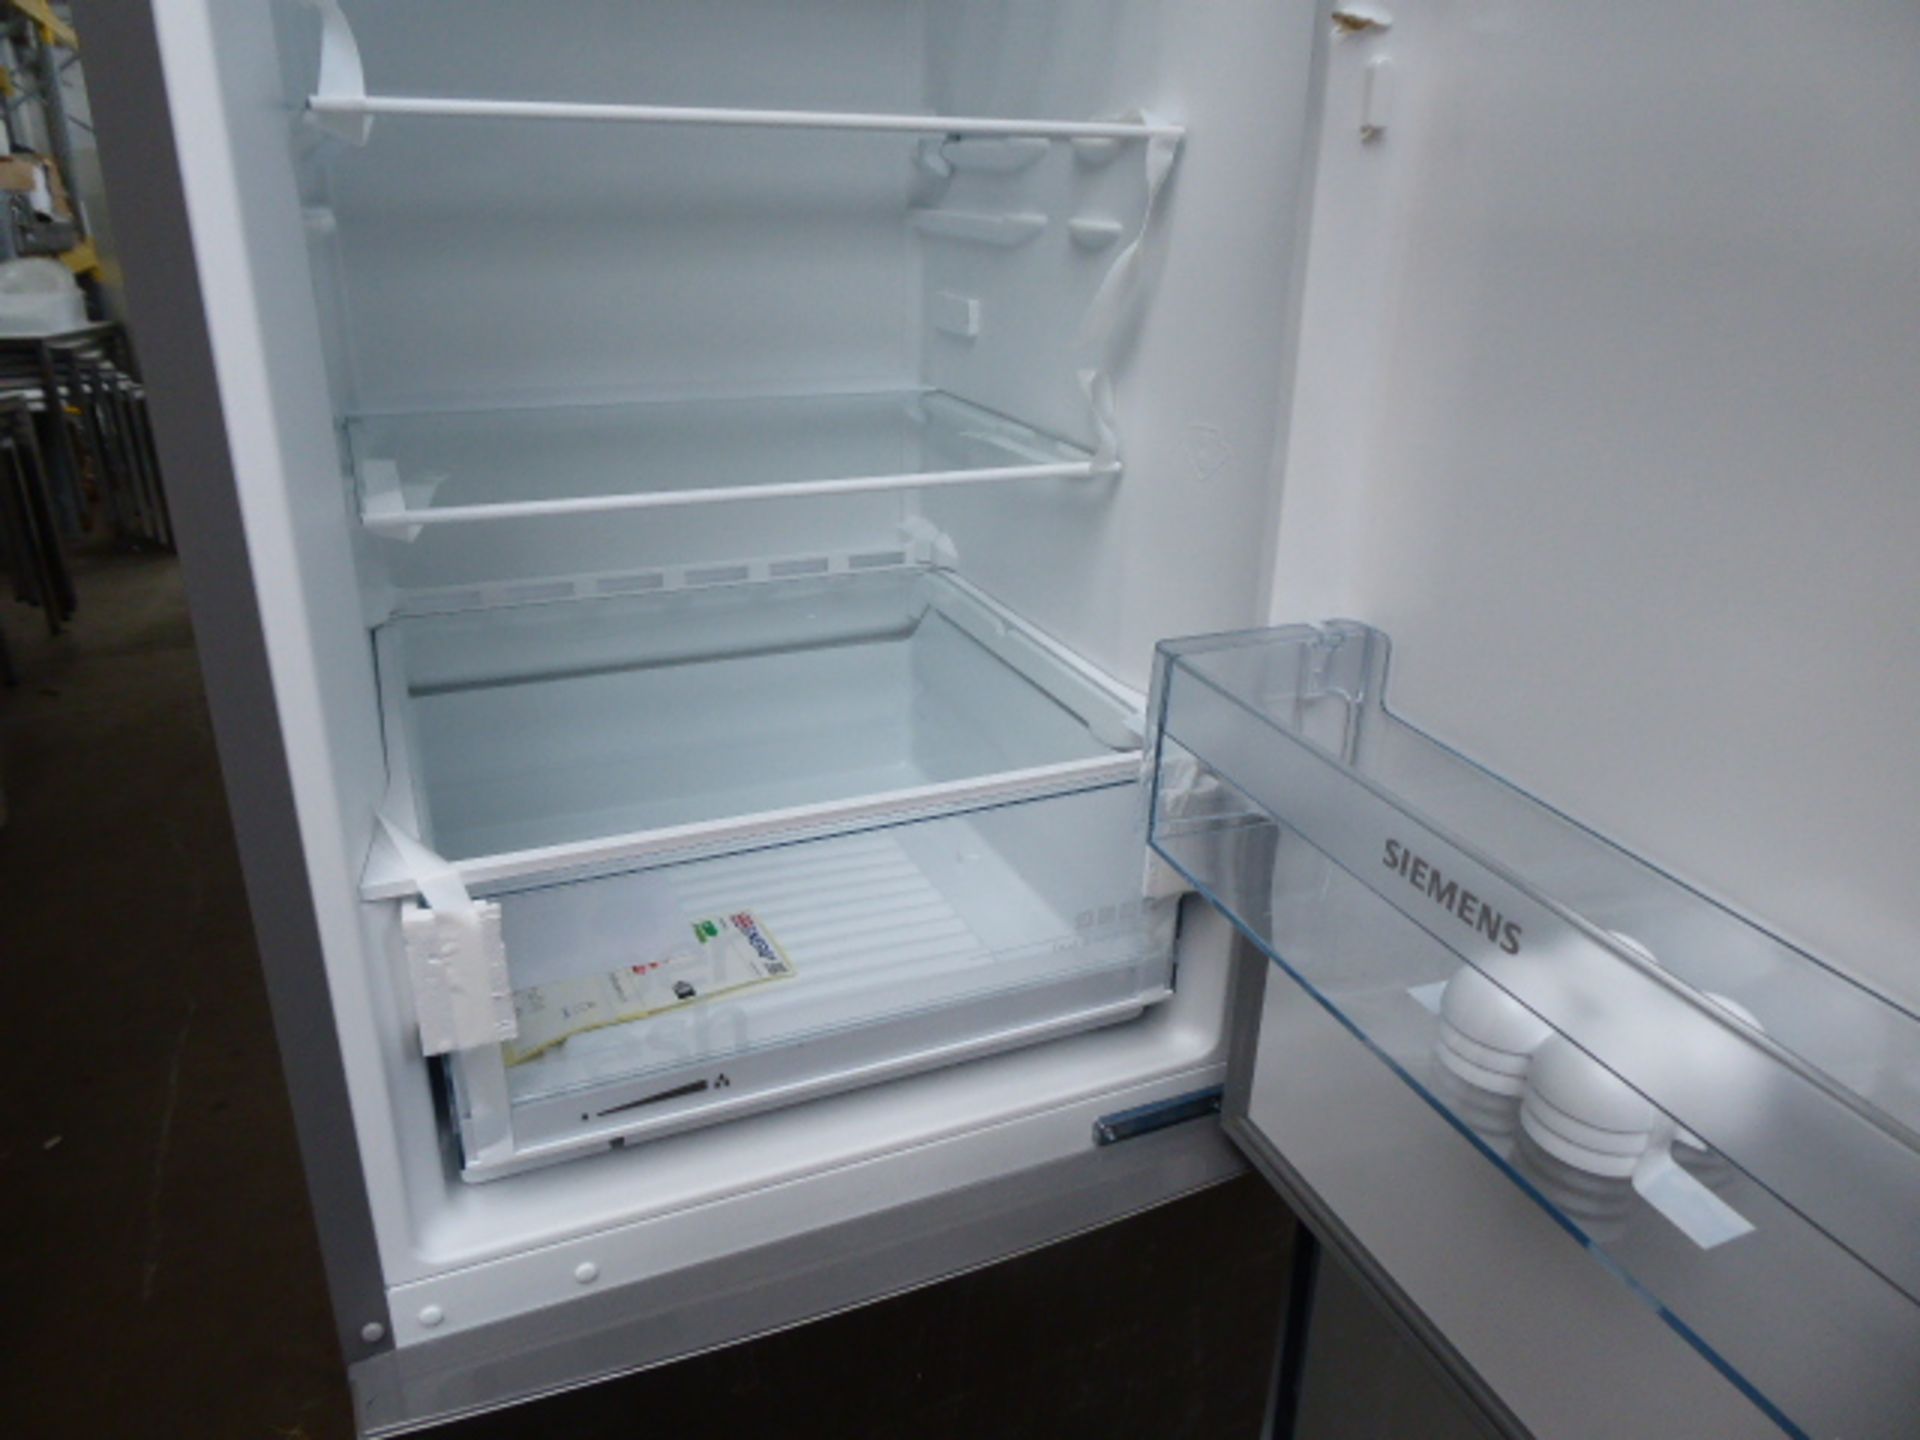 KG39VVIEAGB Siemens Free-standing fridge-freezer - Image 3 of 3